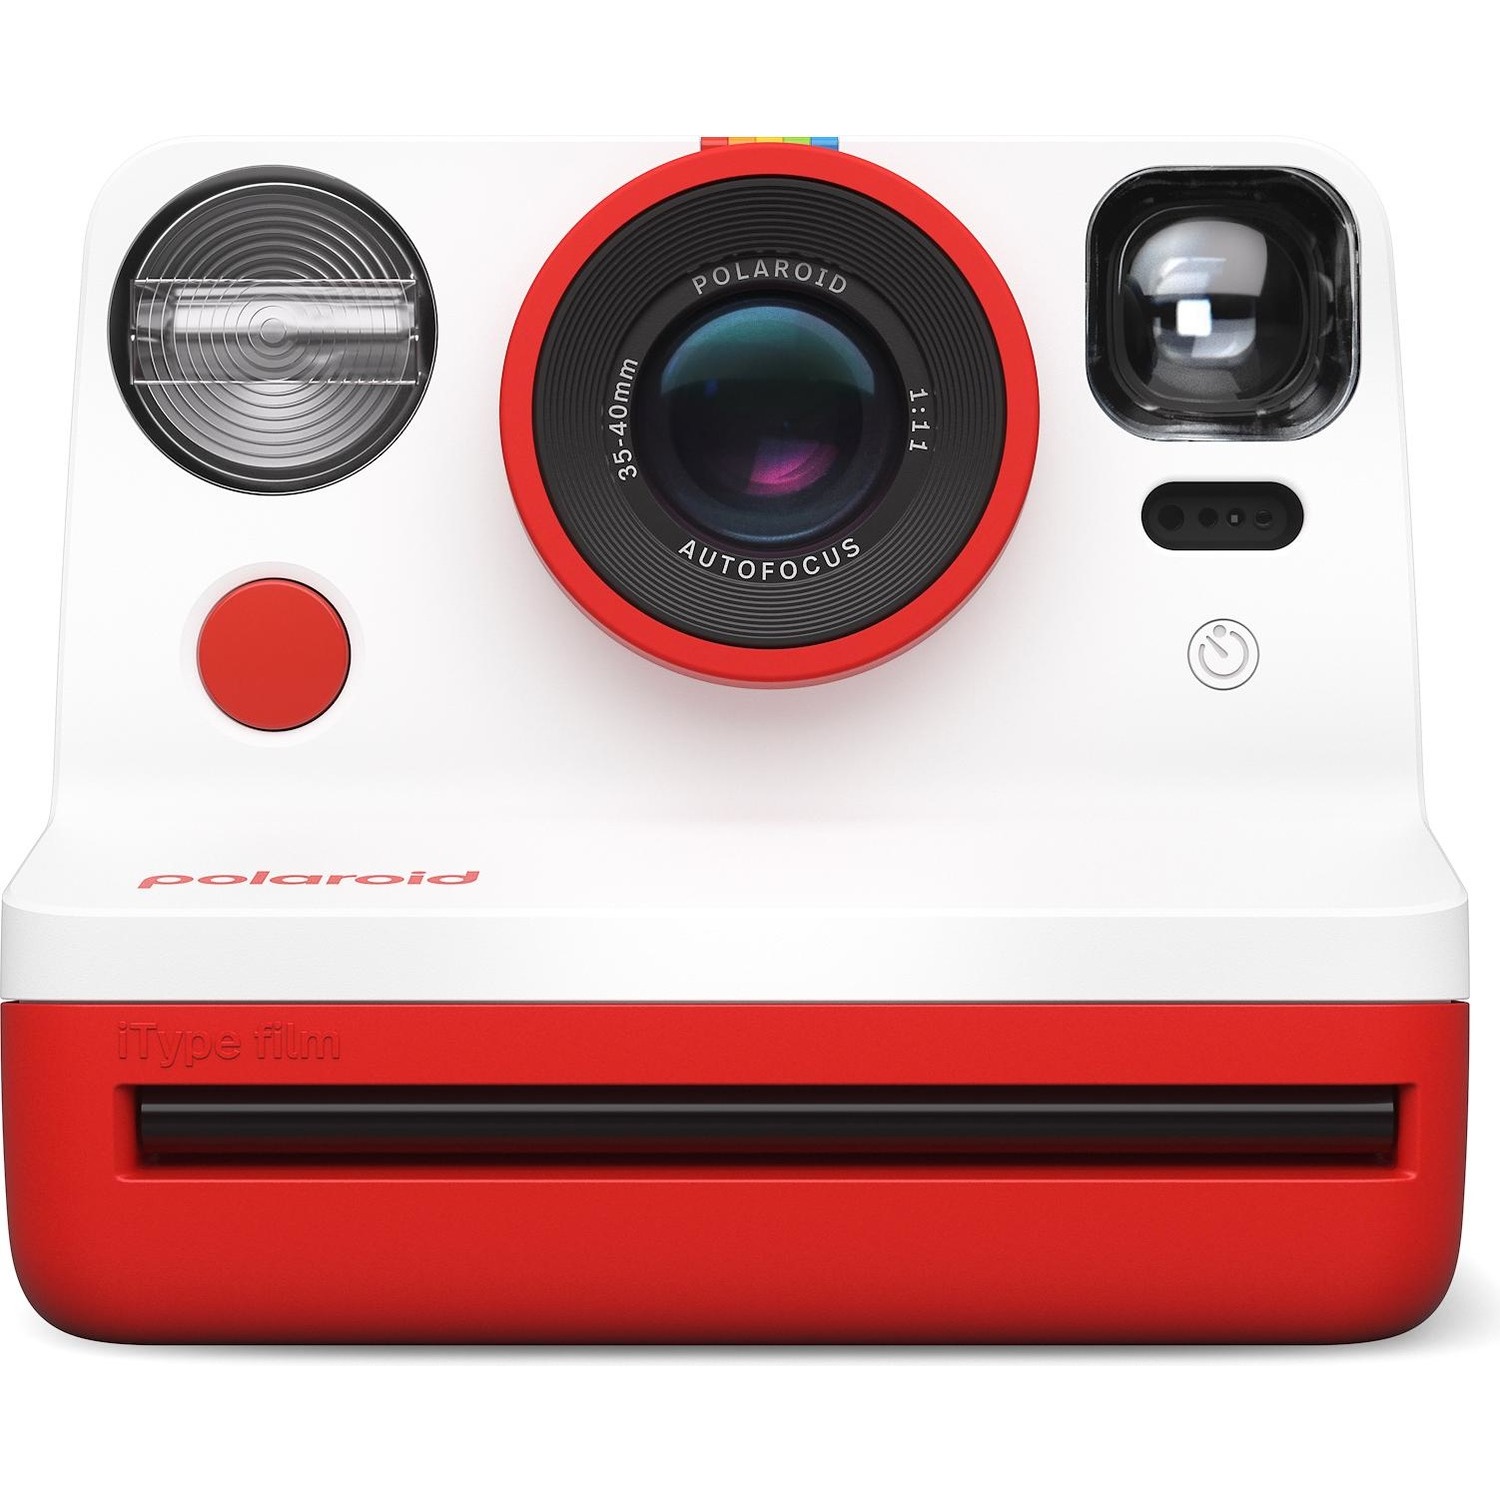 Image of Fotocamera istantanea Polaroid Now colore rosso